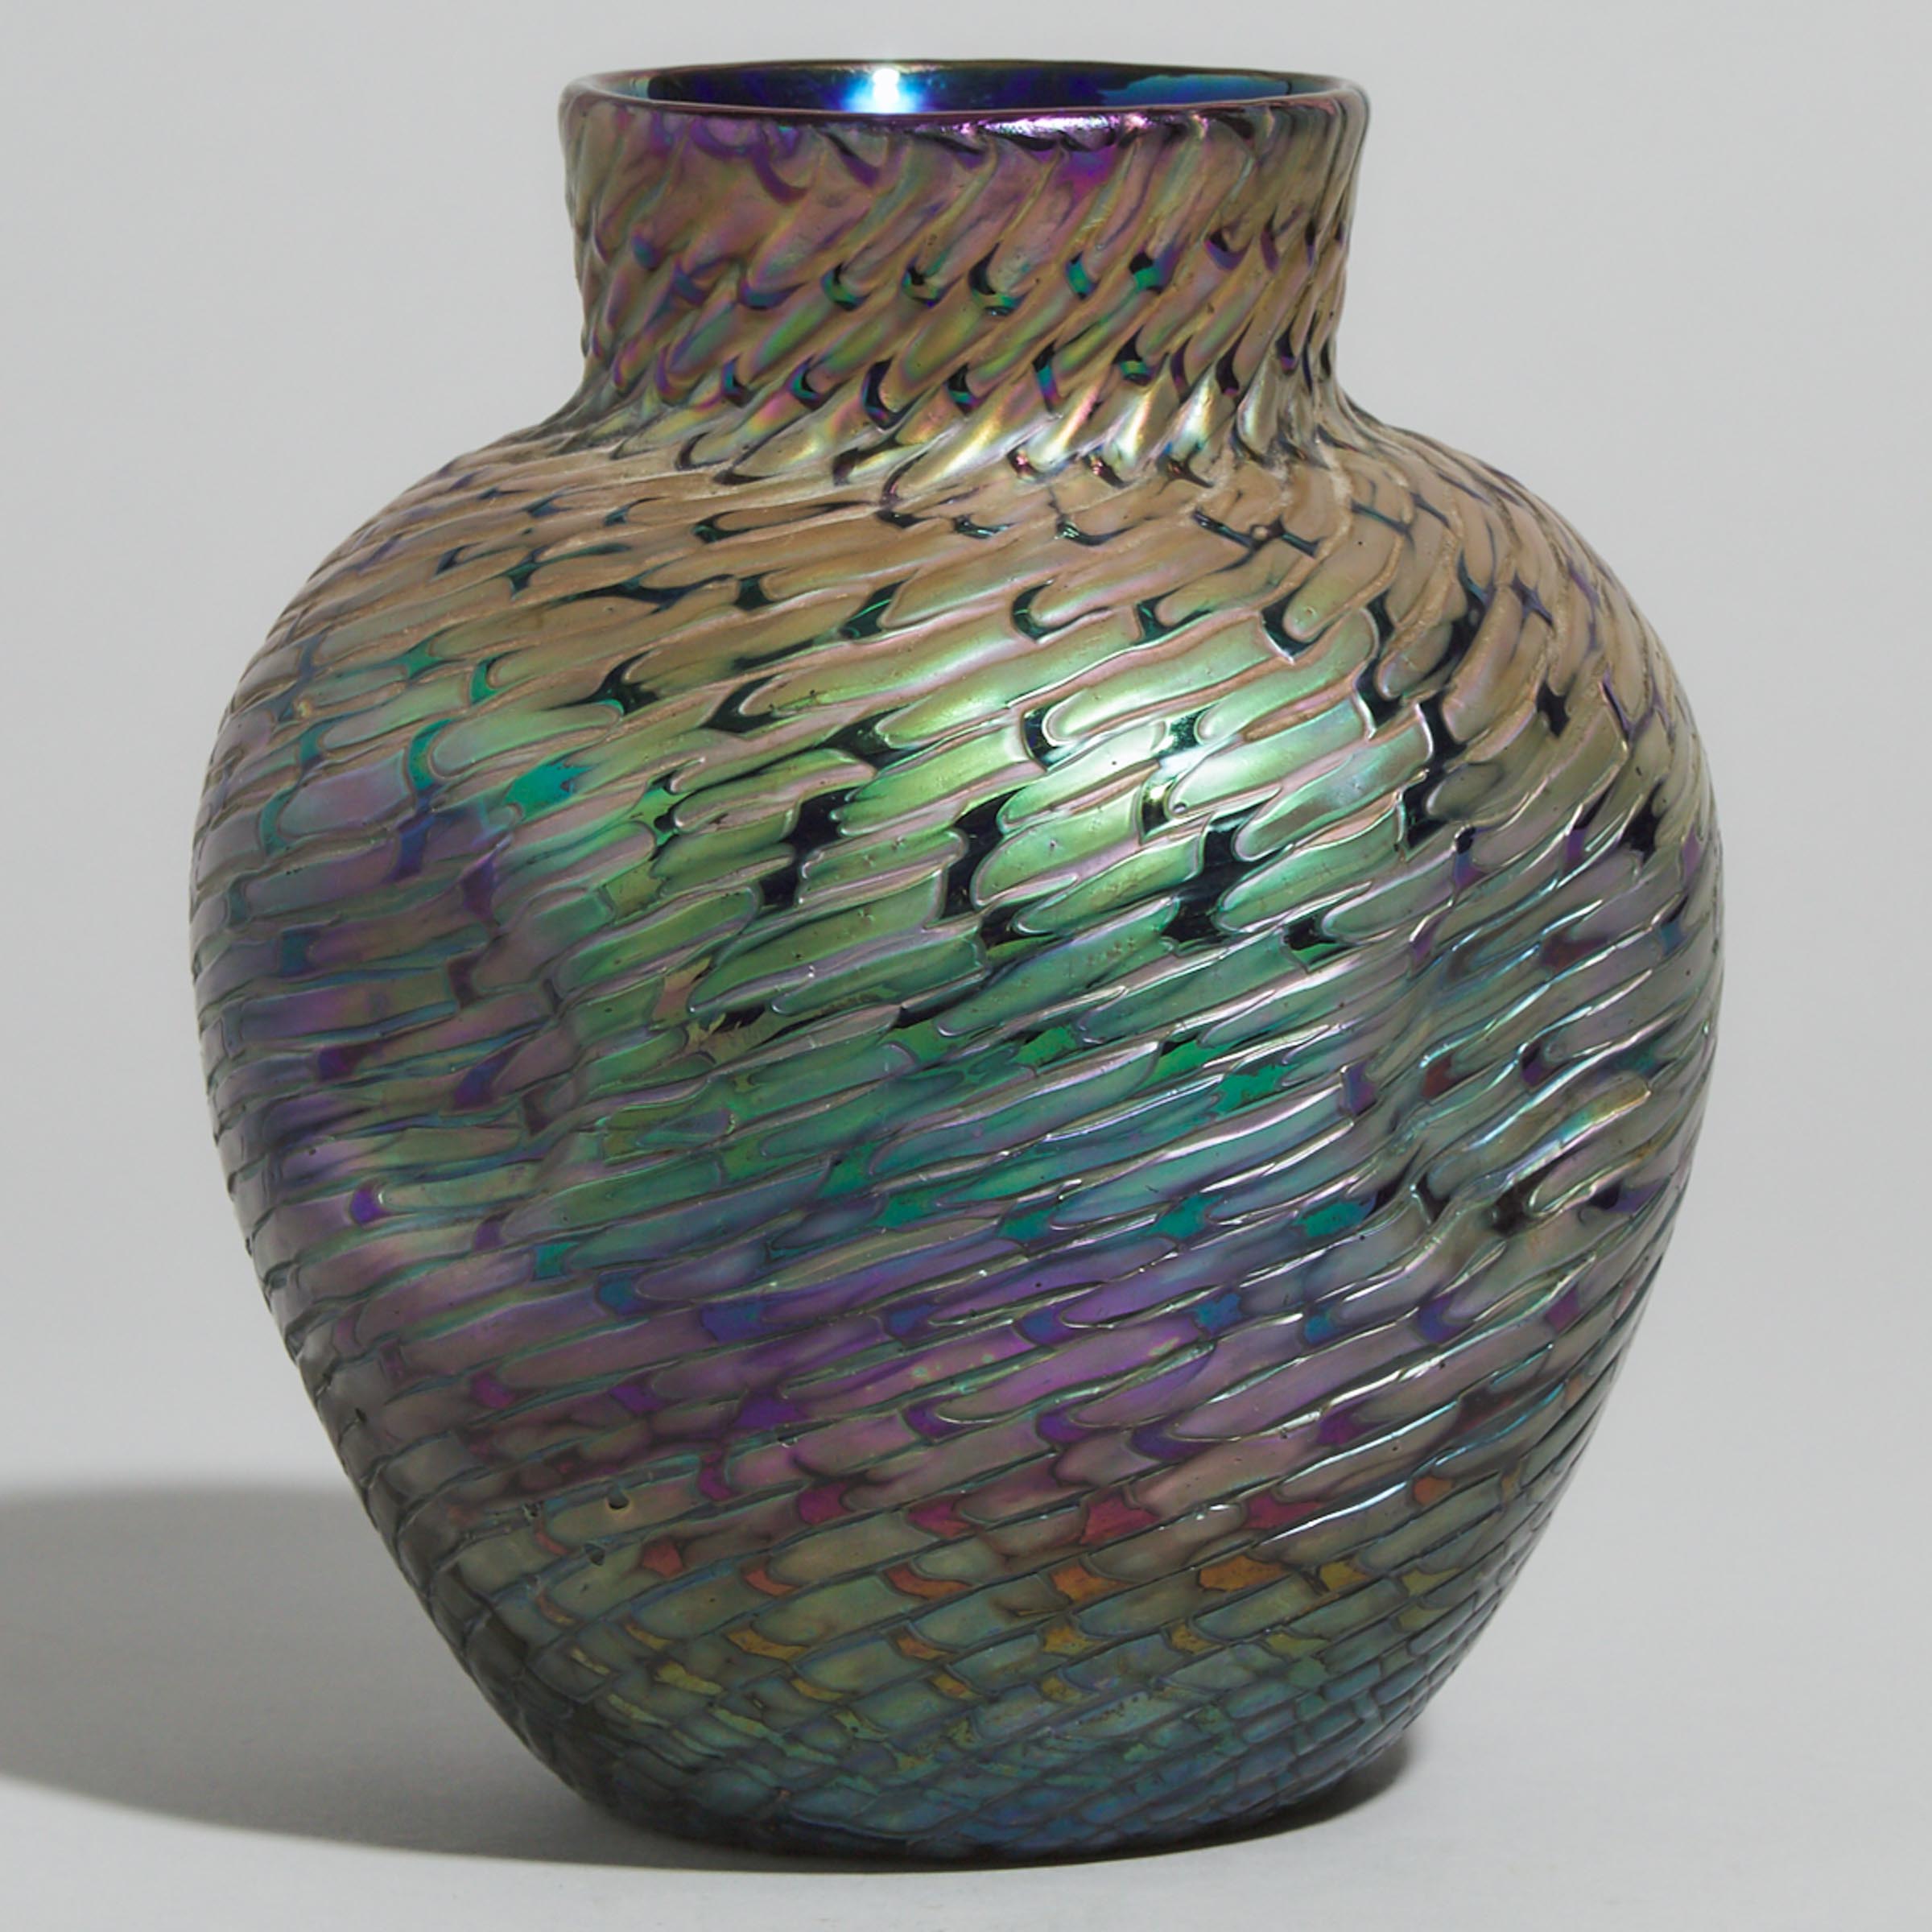 Austrian Iridescent Glass Vase, early 20th century